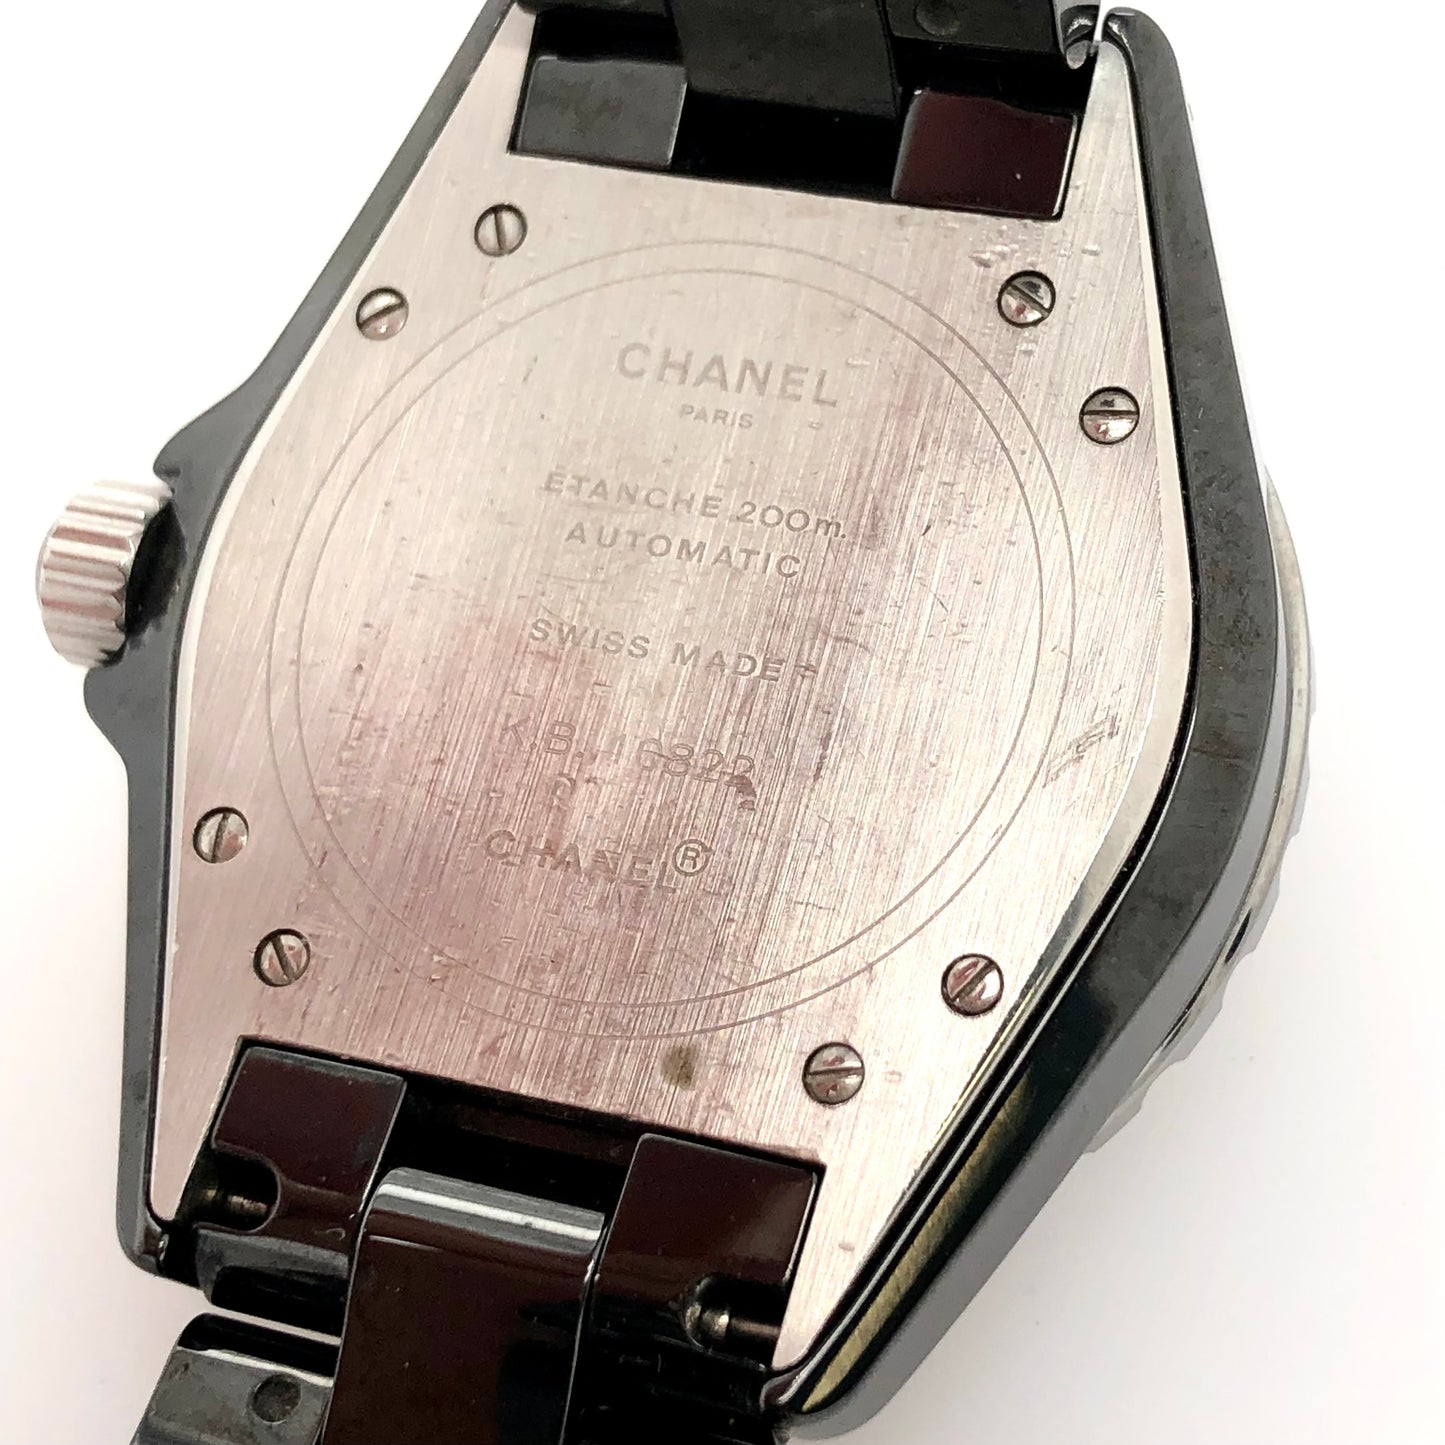 CHANEL J12 Automatic 32mm Black Ceramics & Steel Watch